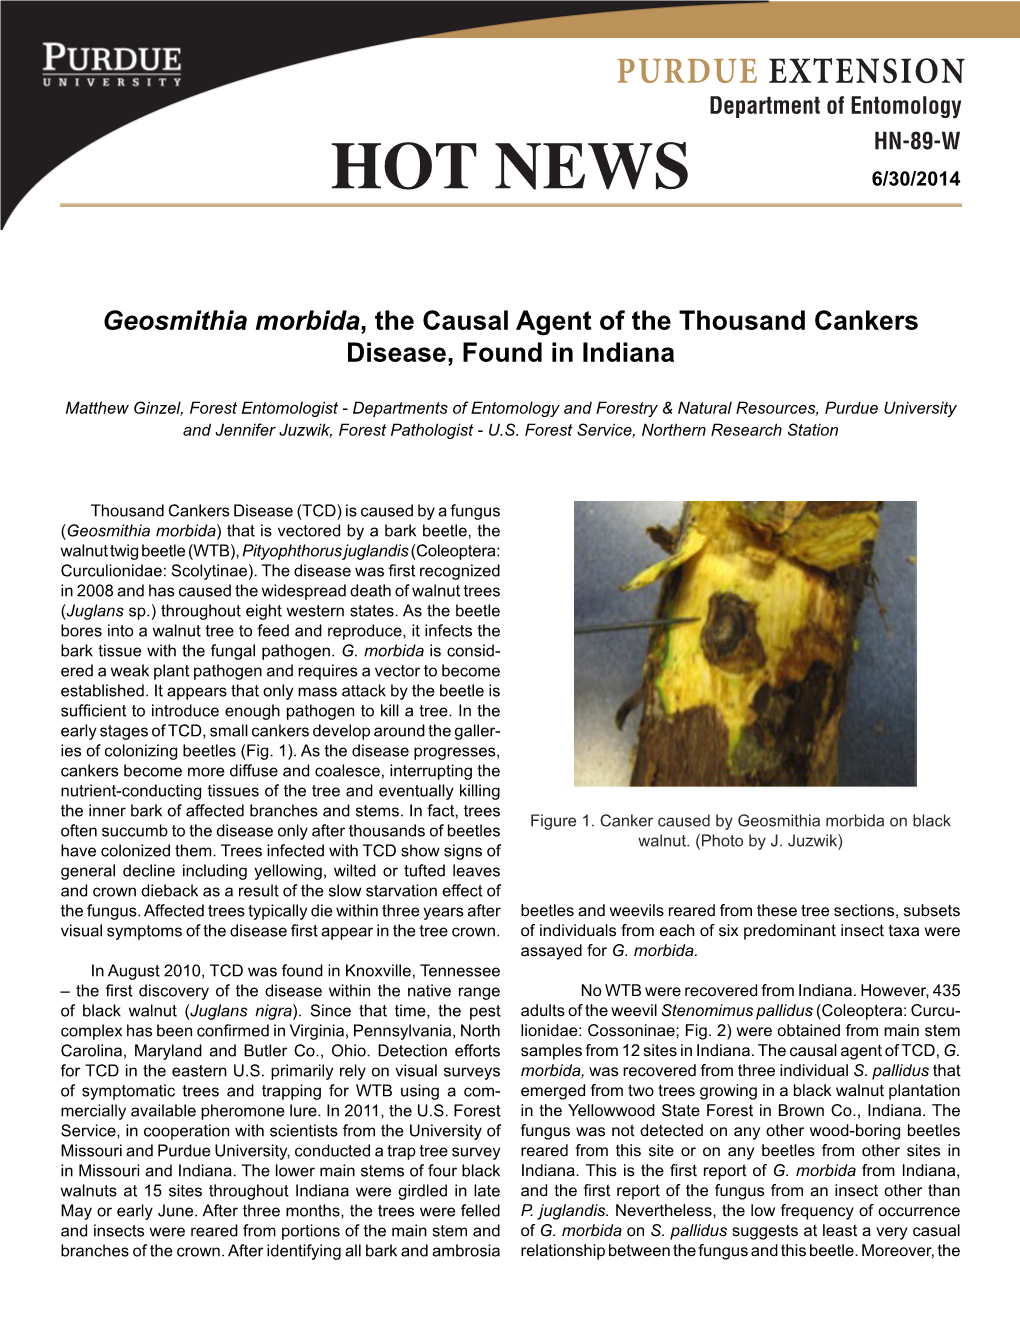 Geosmithia Morbida, the Causal Agent of Thousand Cankers Disease, Found